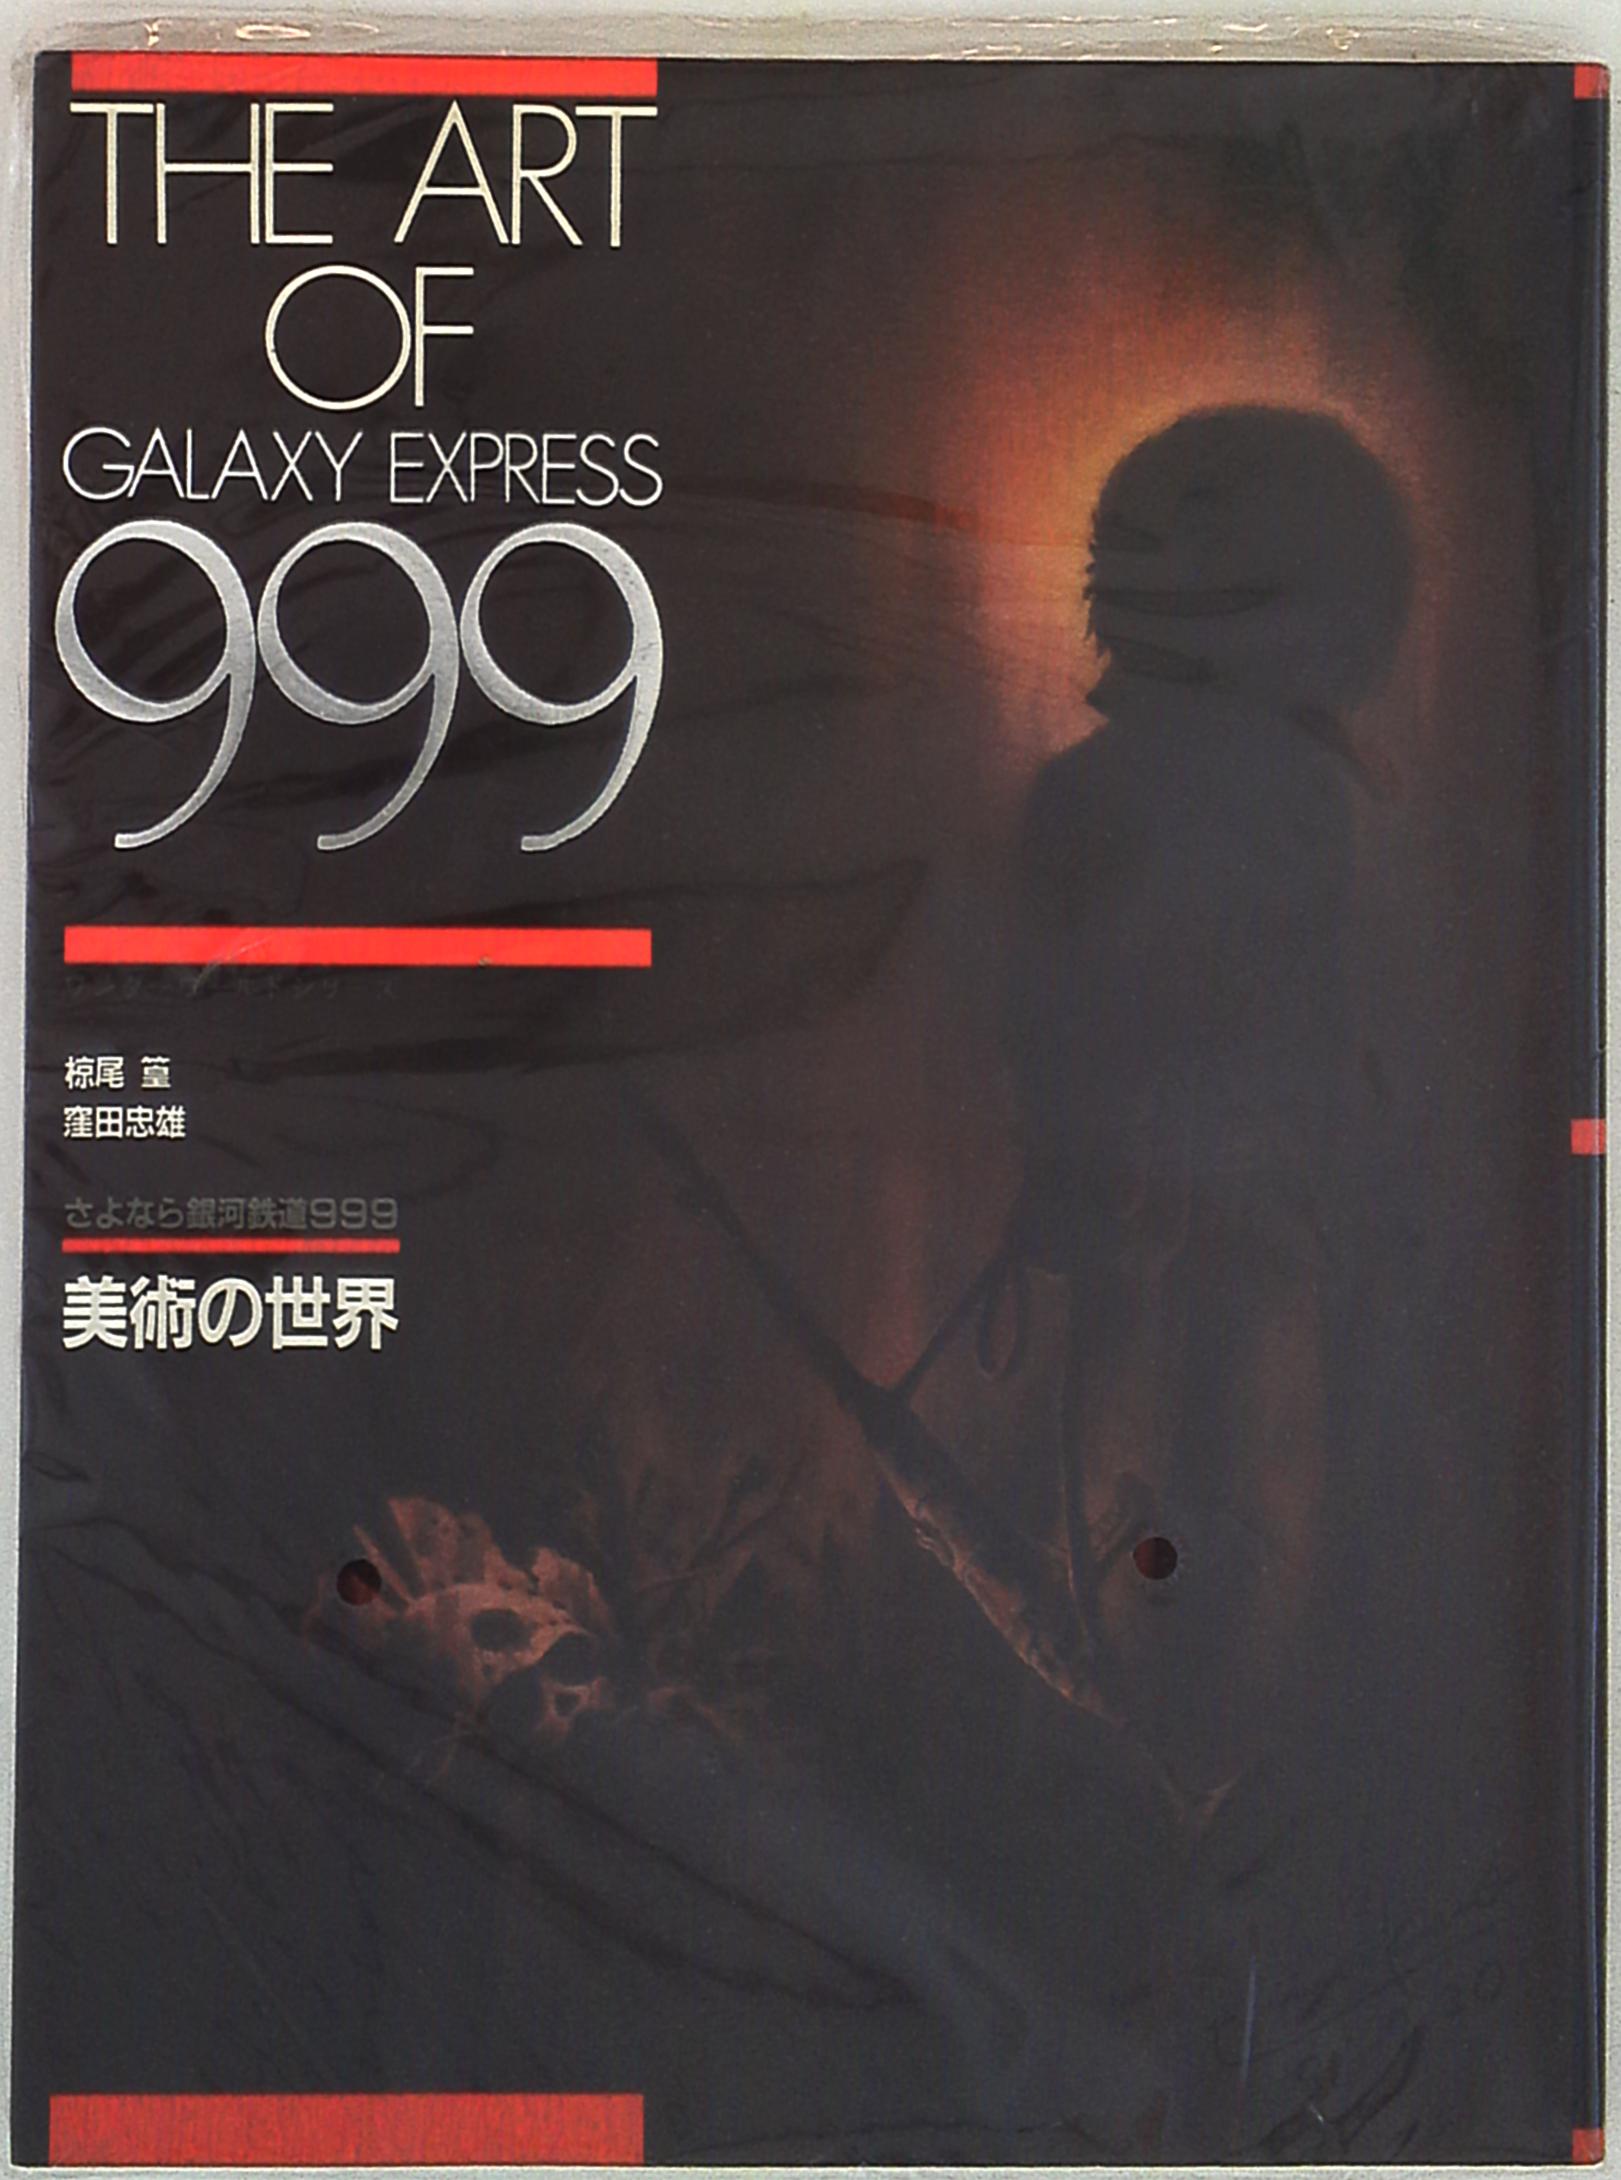 The　ワンダーワールドシリーズ　講談社　Mandarake　(初版)　Galaxy　Art　Express999さよなら銀河鉄道999美術の世界　of　まんだらけ